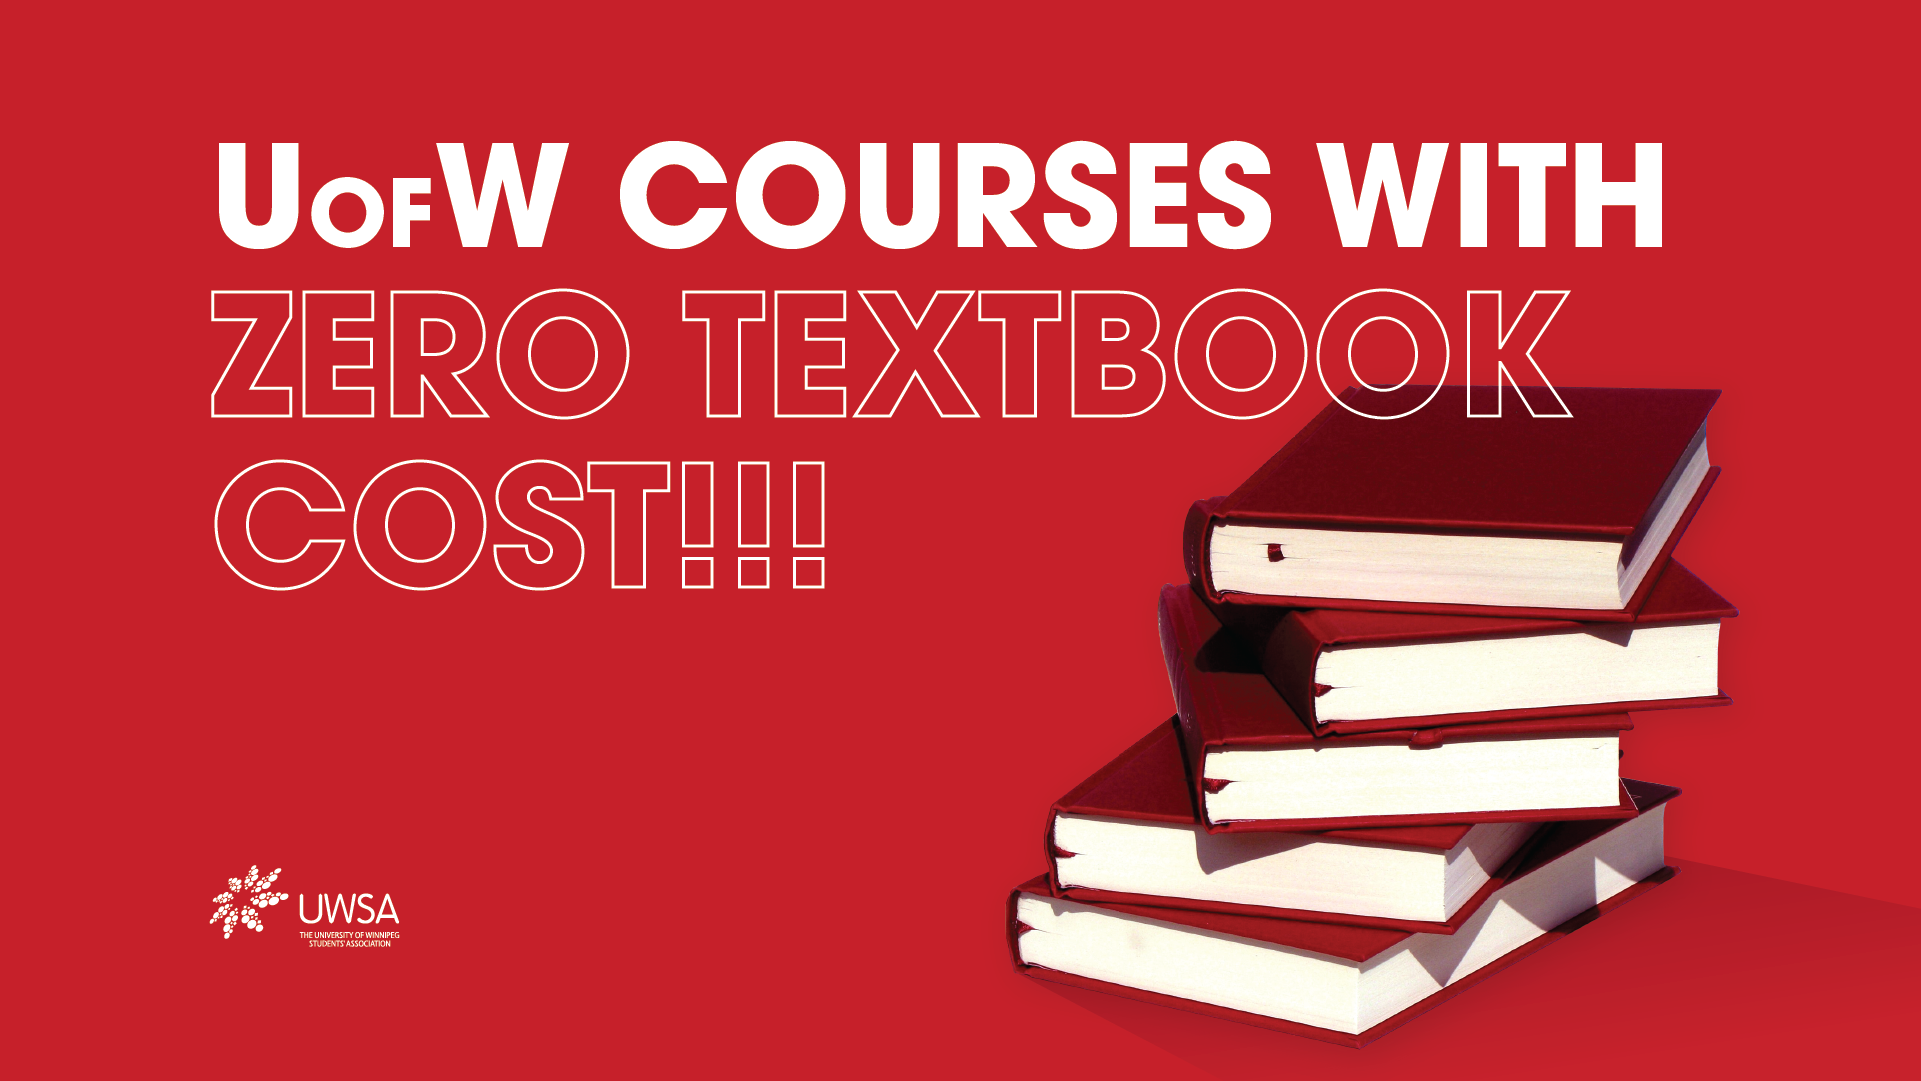 Graphic Text: UW Courses with Zero Textbook Cost!